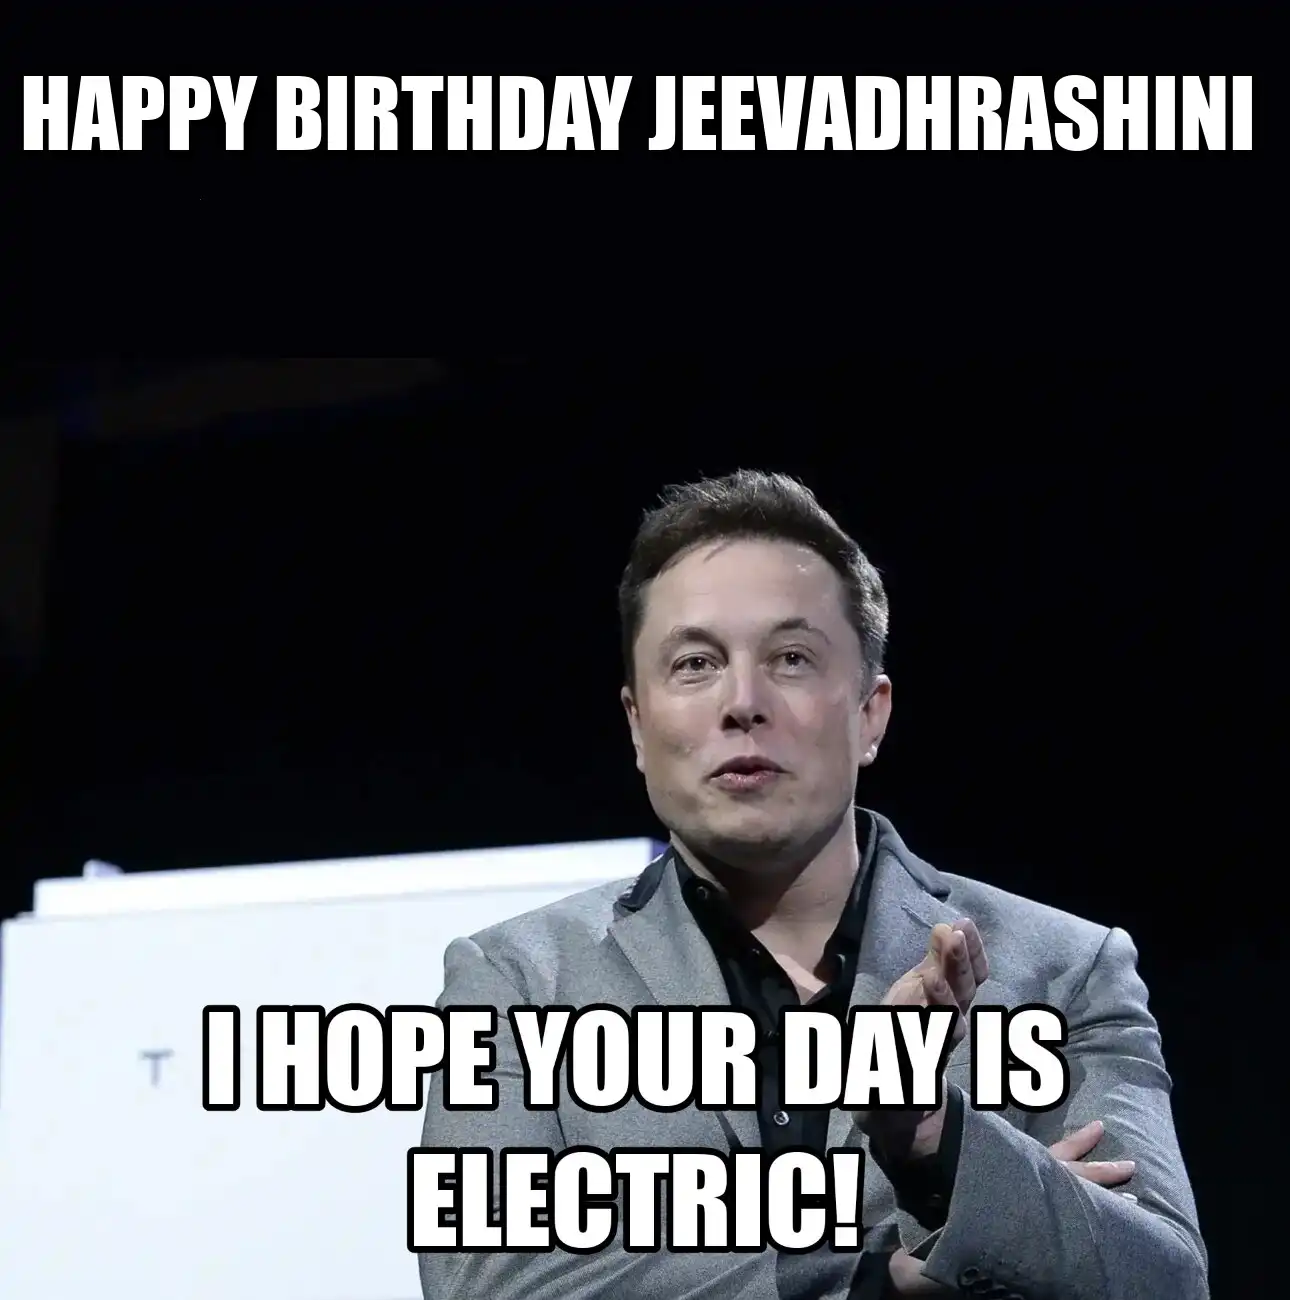 Happy Birthday Jeevadhrashini I Hope Your Day Is Electric Meme